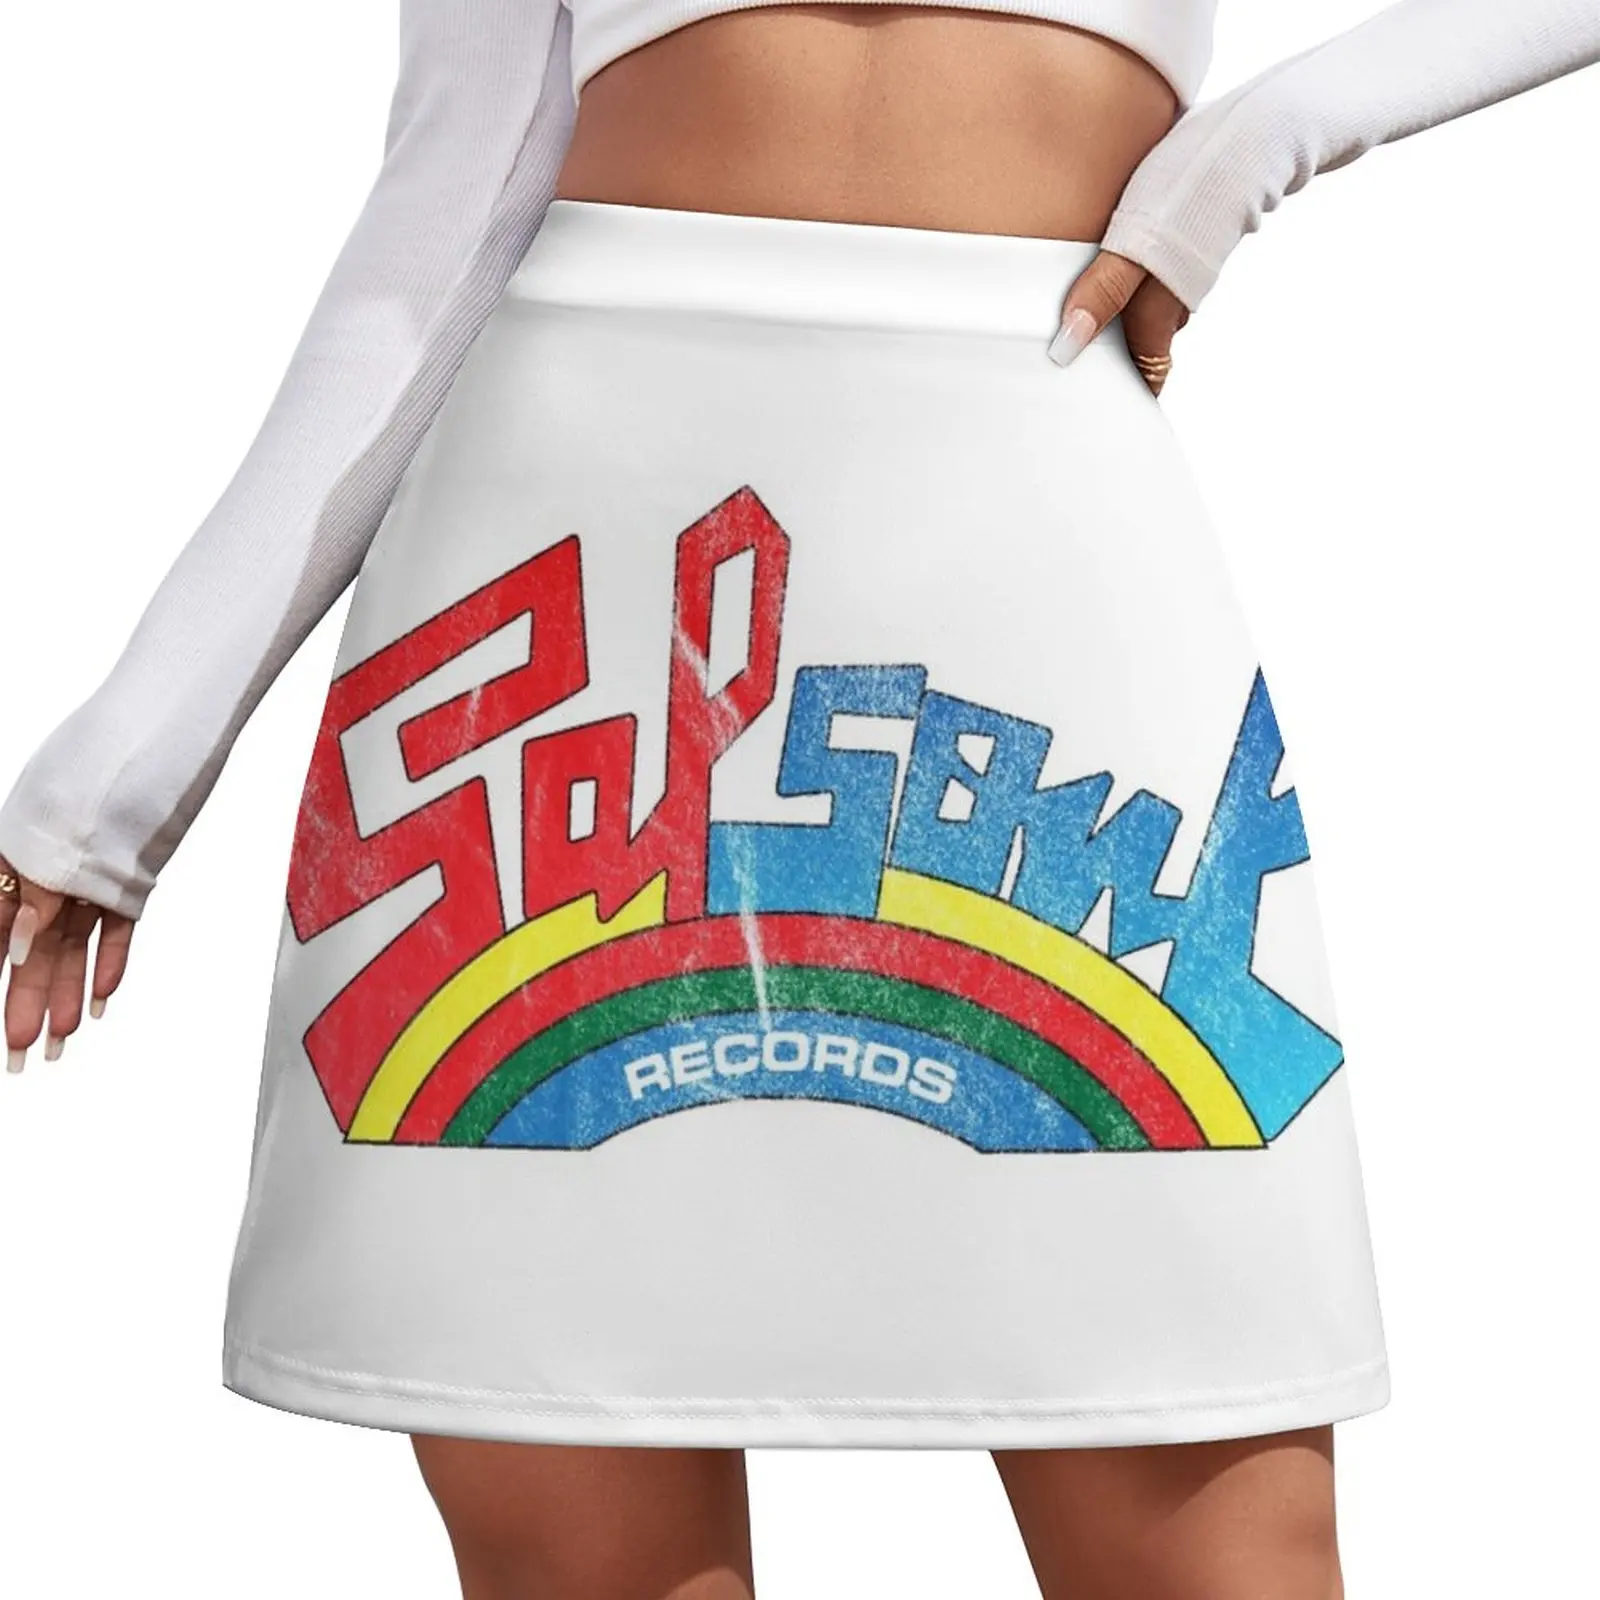 Salsoul Records Mini Skirt mini skirt luxury designer clothing women fashion